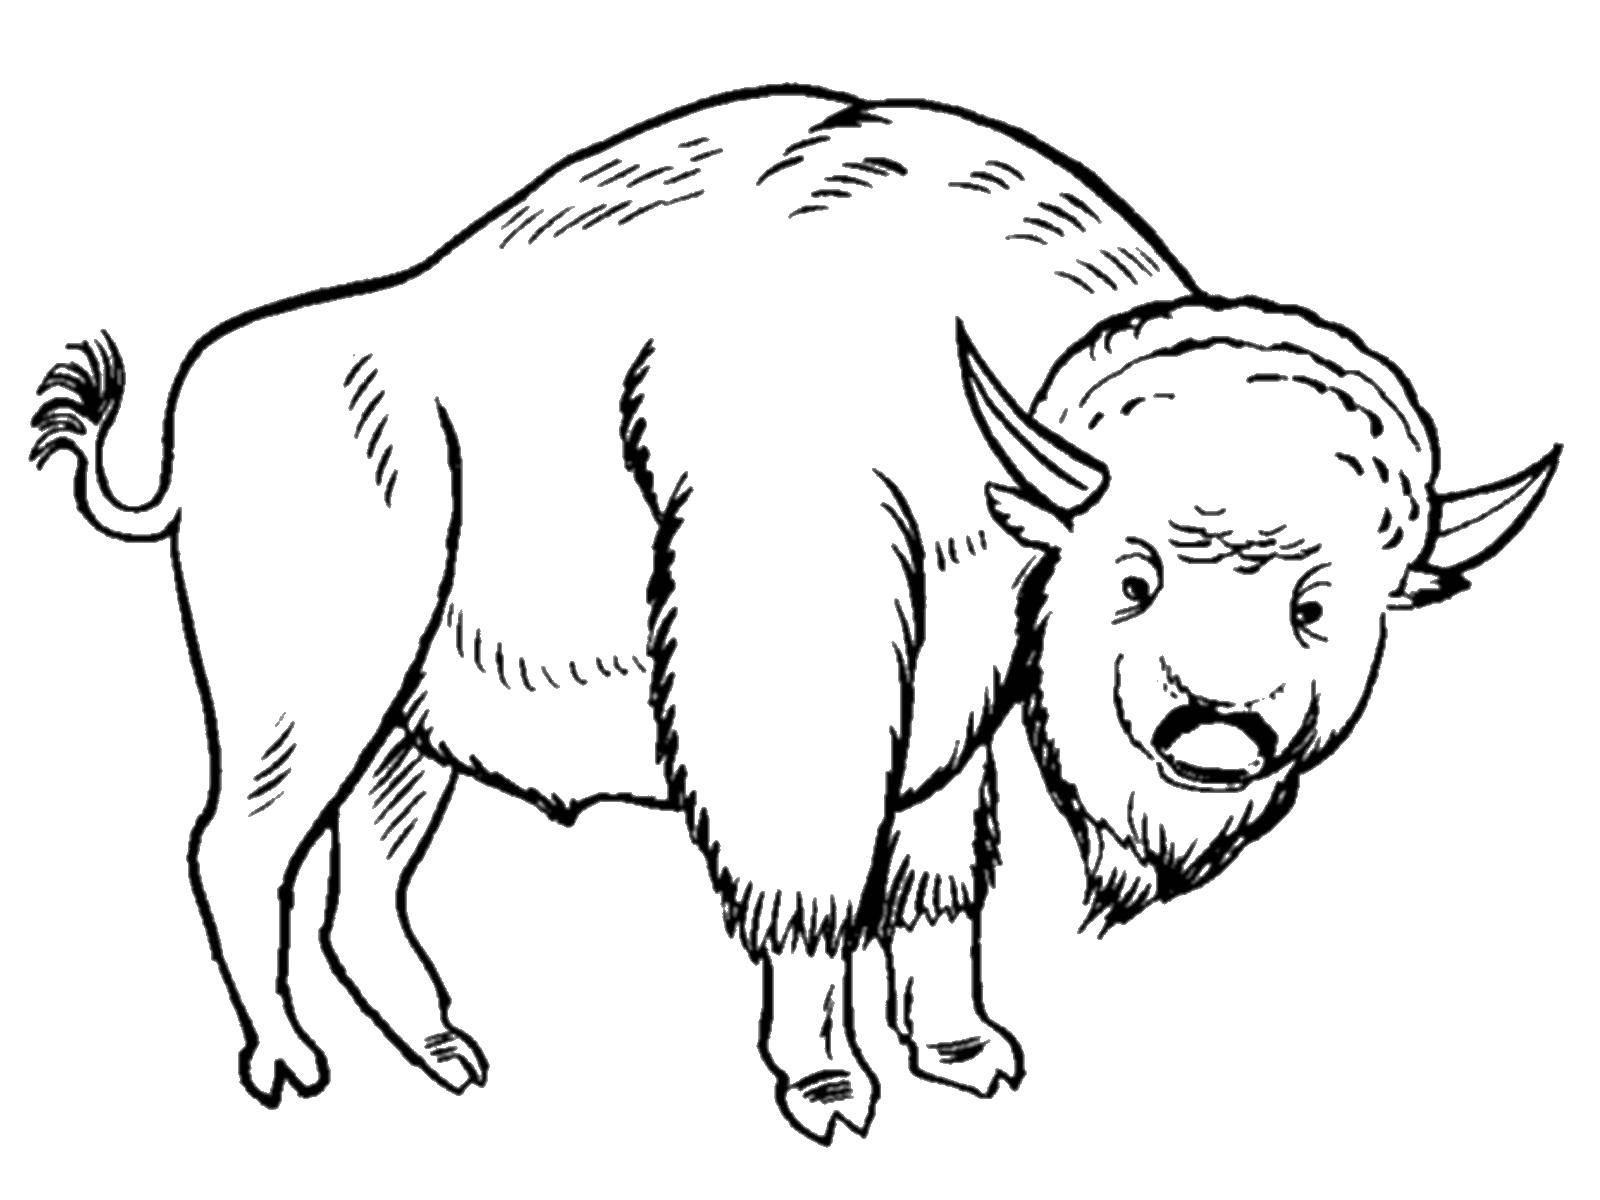 Coloring Strong Buffalo. Category animals. Tags:  Animals, Buffalo.